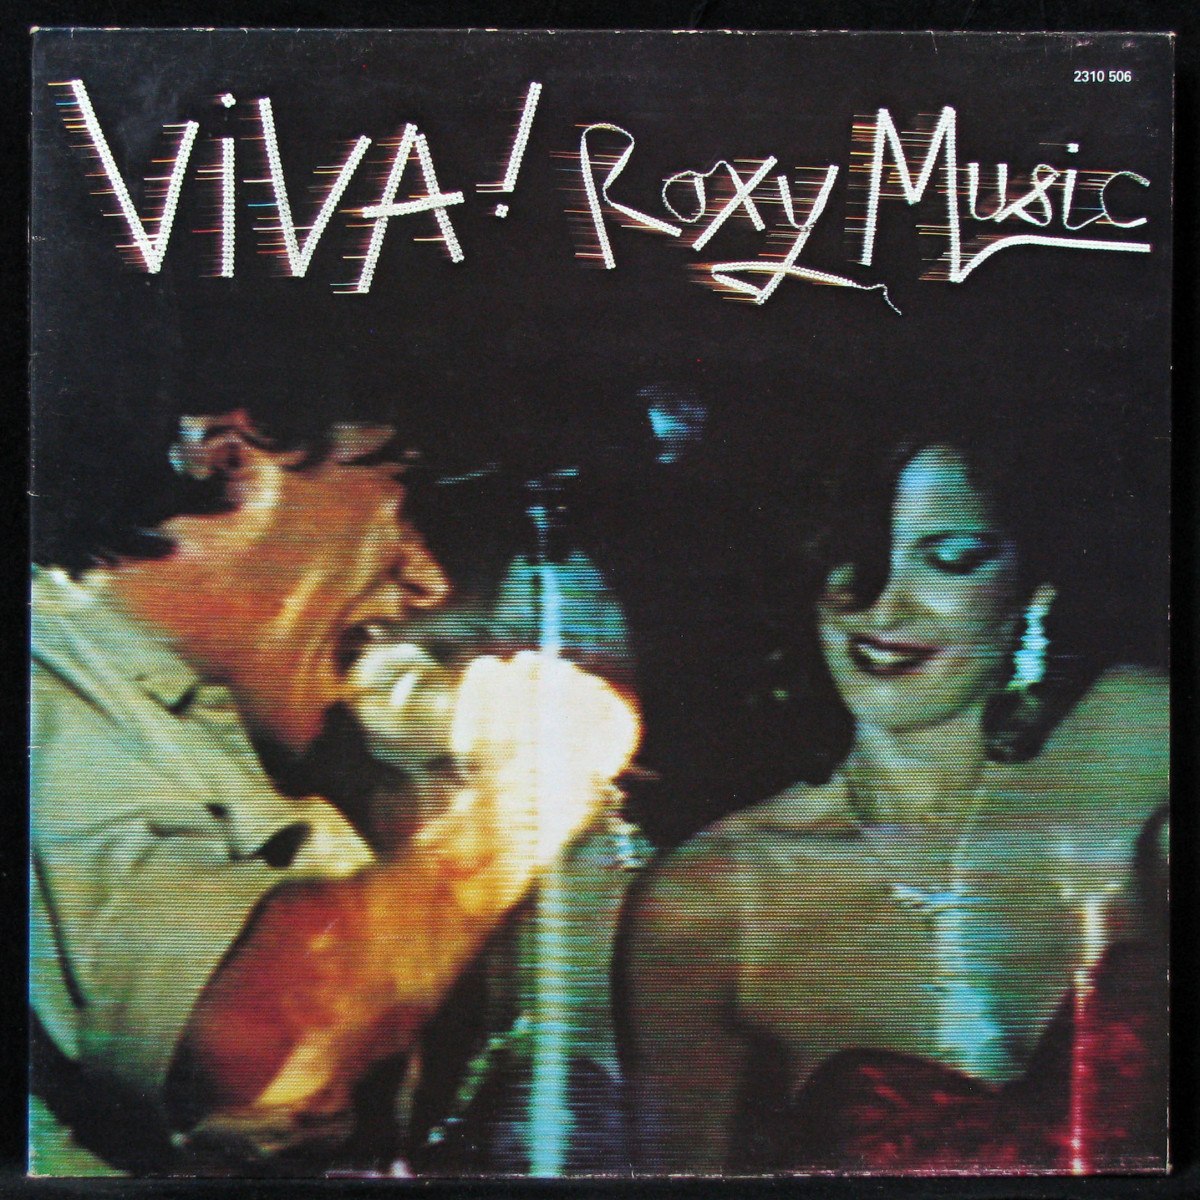 LP Roxy Music — Viva! Roxy Music фото